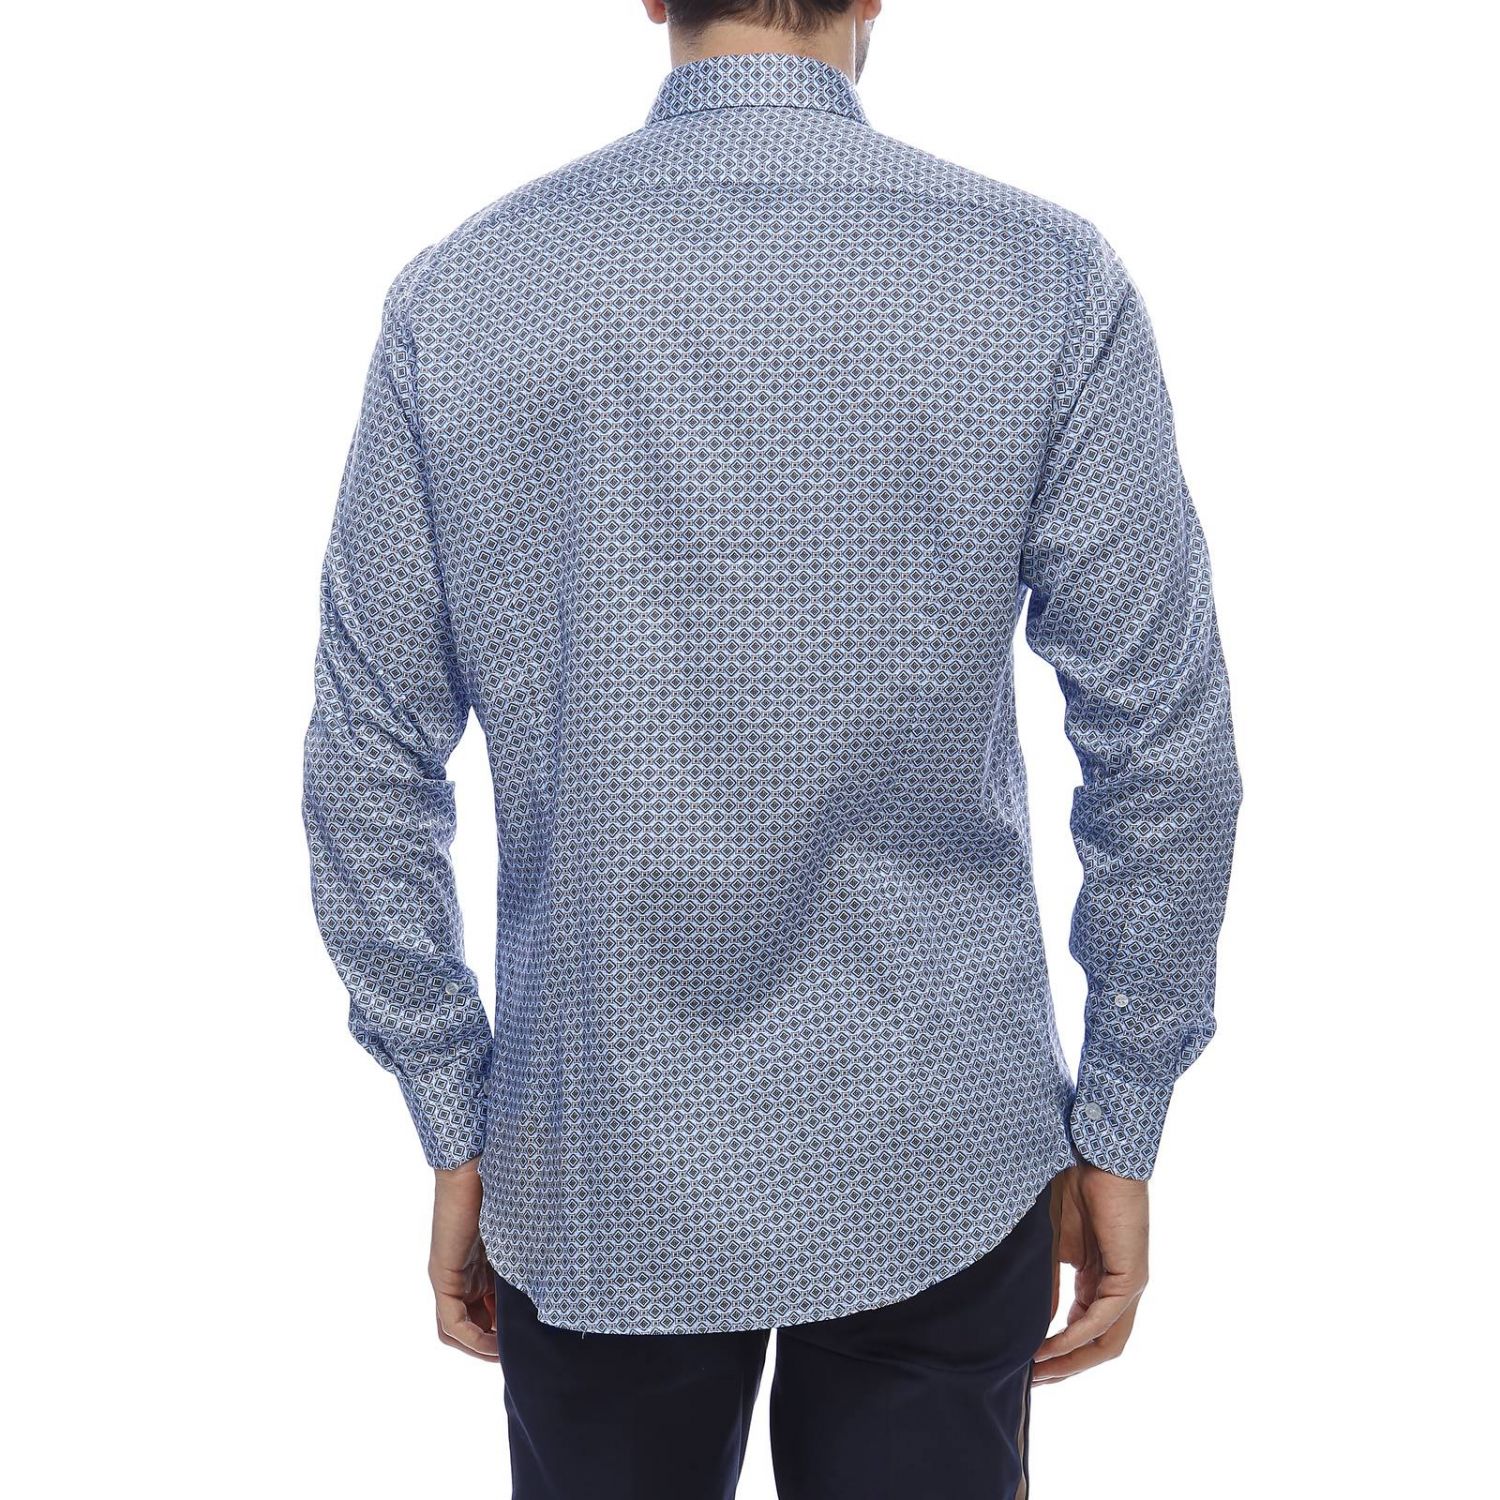 Etro Outlet: Shirt men - Gnawed Blue | Shirt Etro 12908 4755 GIGLIO.COM